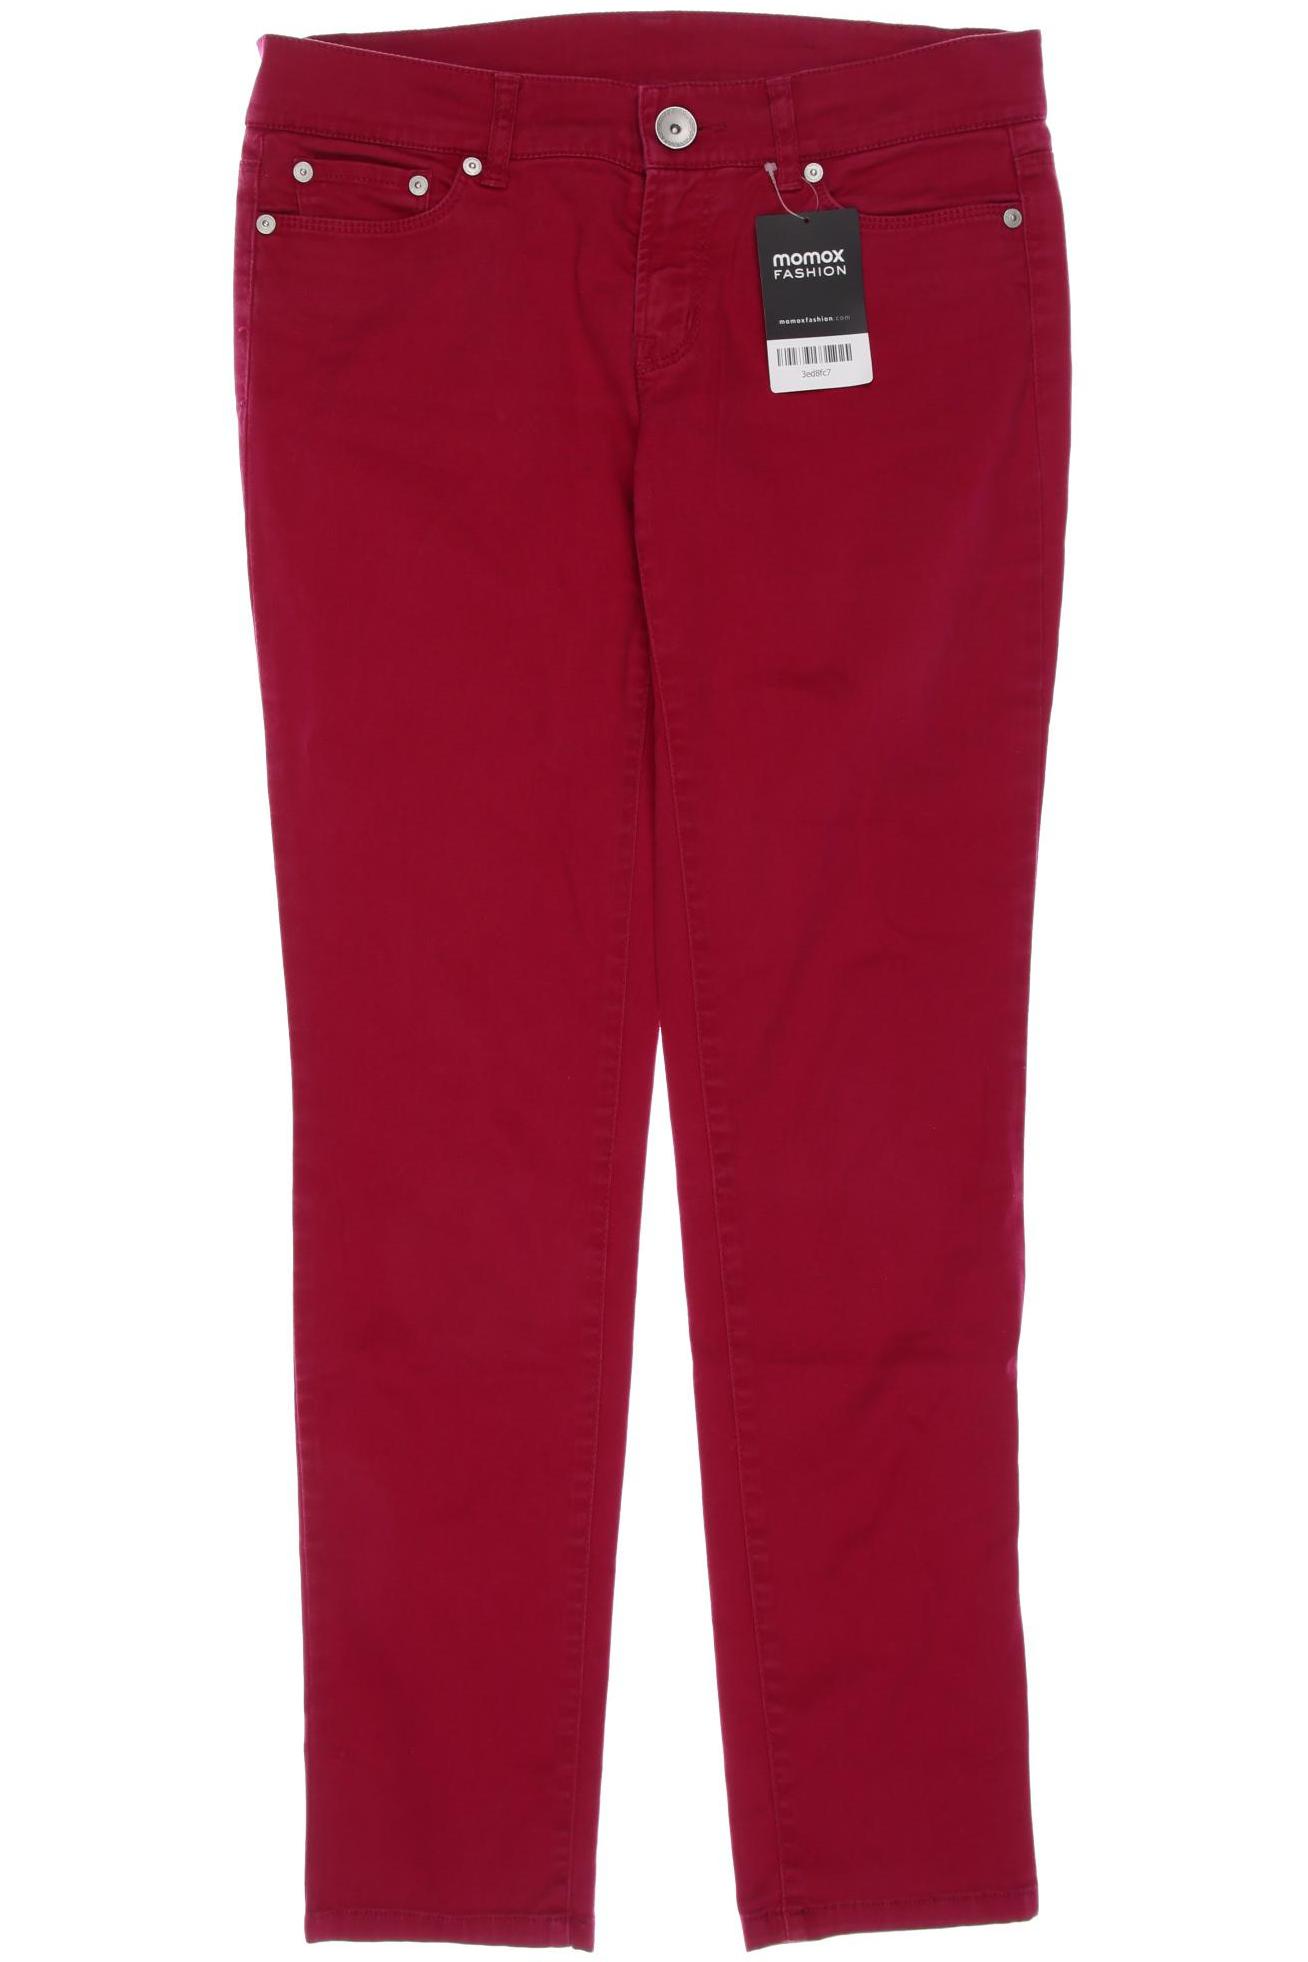 UNITED COLORS OF BENETTON Damen Jeans, pink von United Colors of Benetton